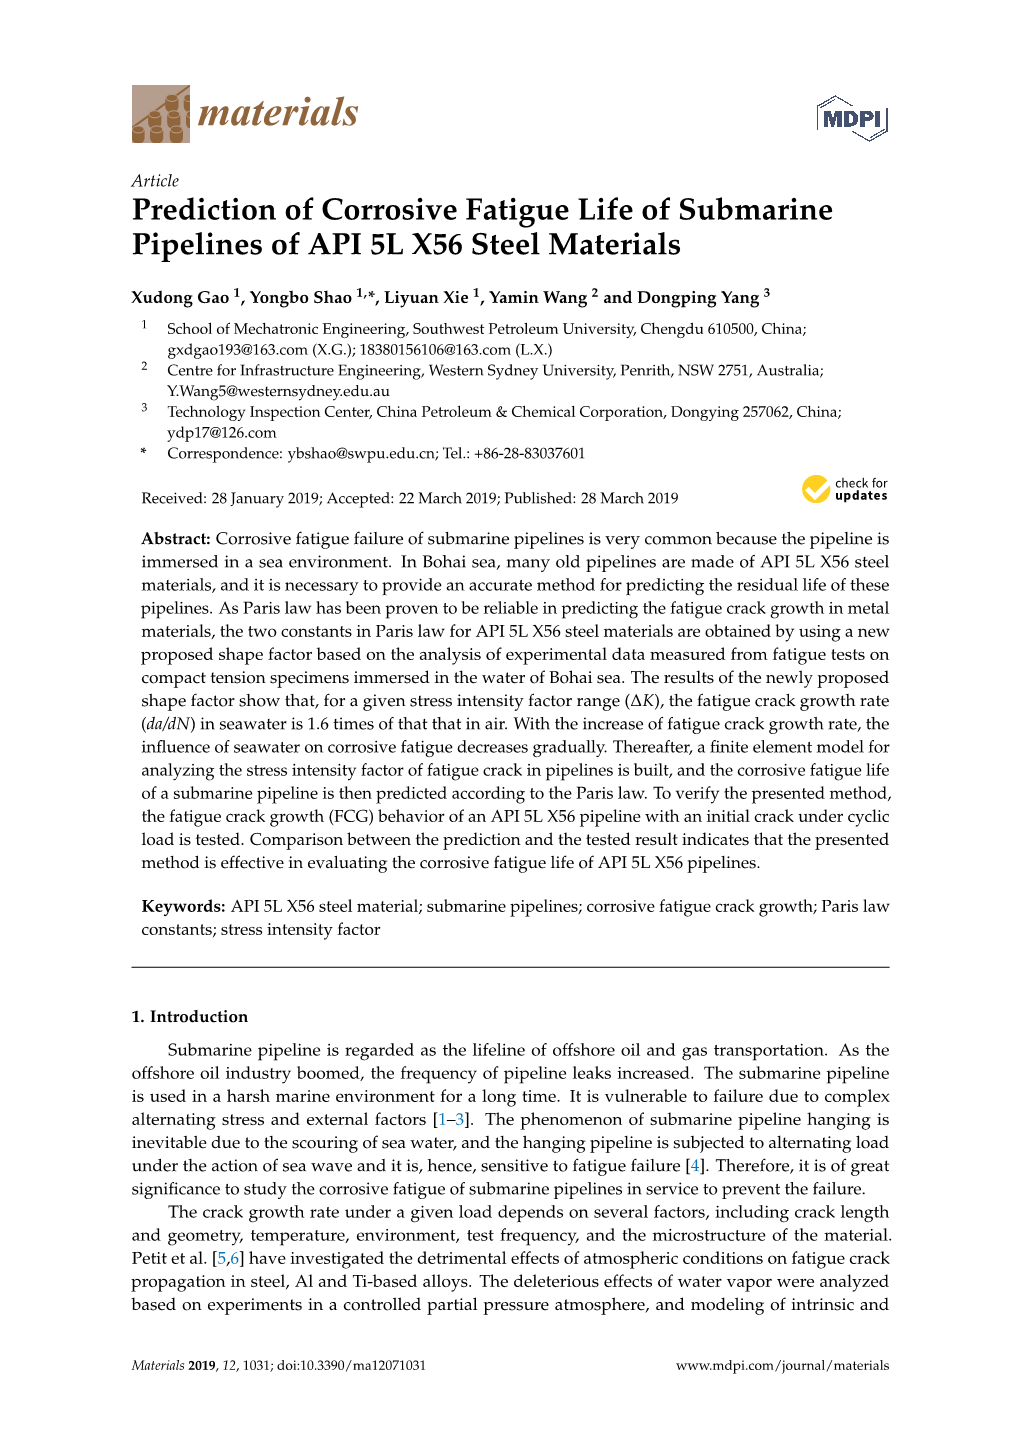 Prediction of Corrosive Fatigue Life of Submarine Pipelines of API 5L X56 Steel Materials